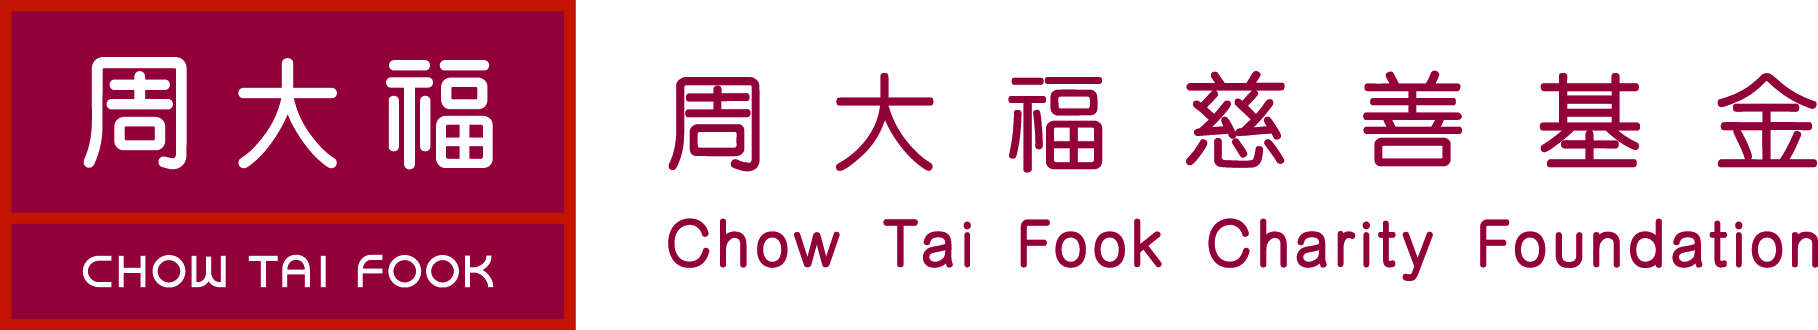 CTFCF (HKG) Logo_Horizontal-Color